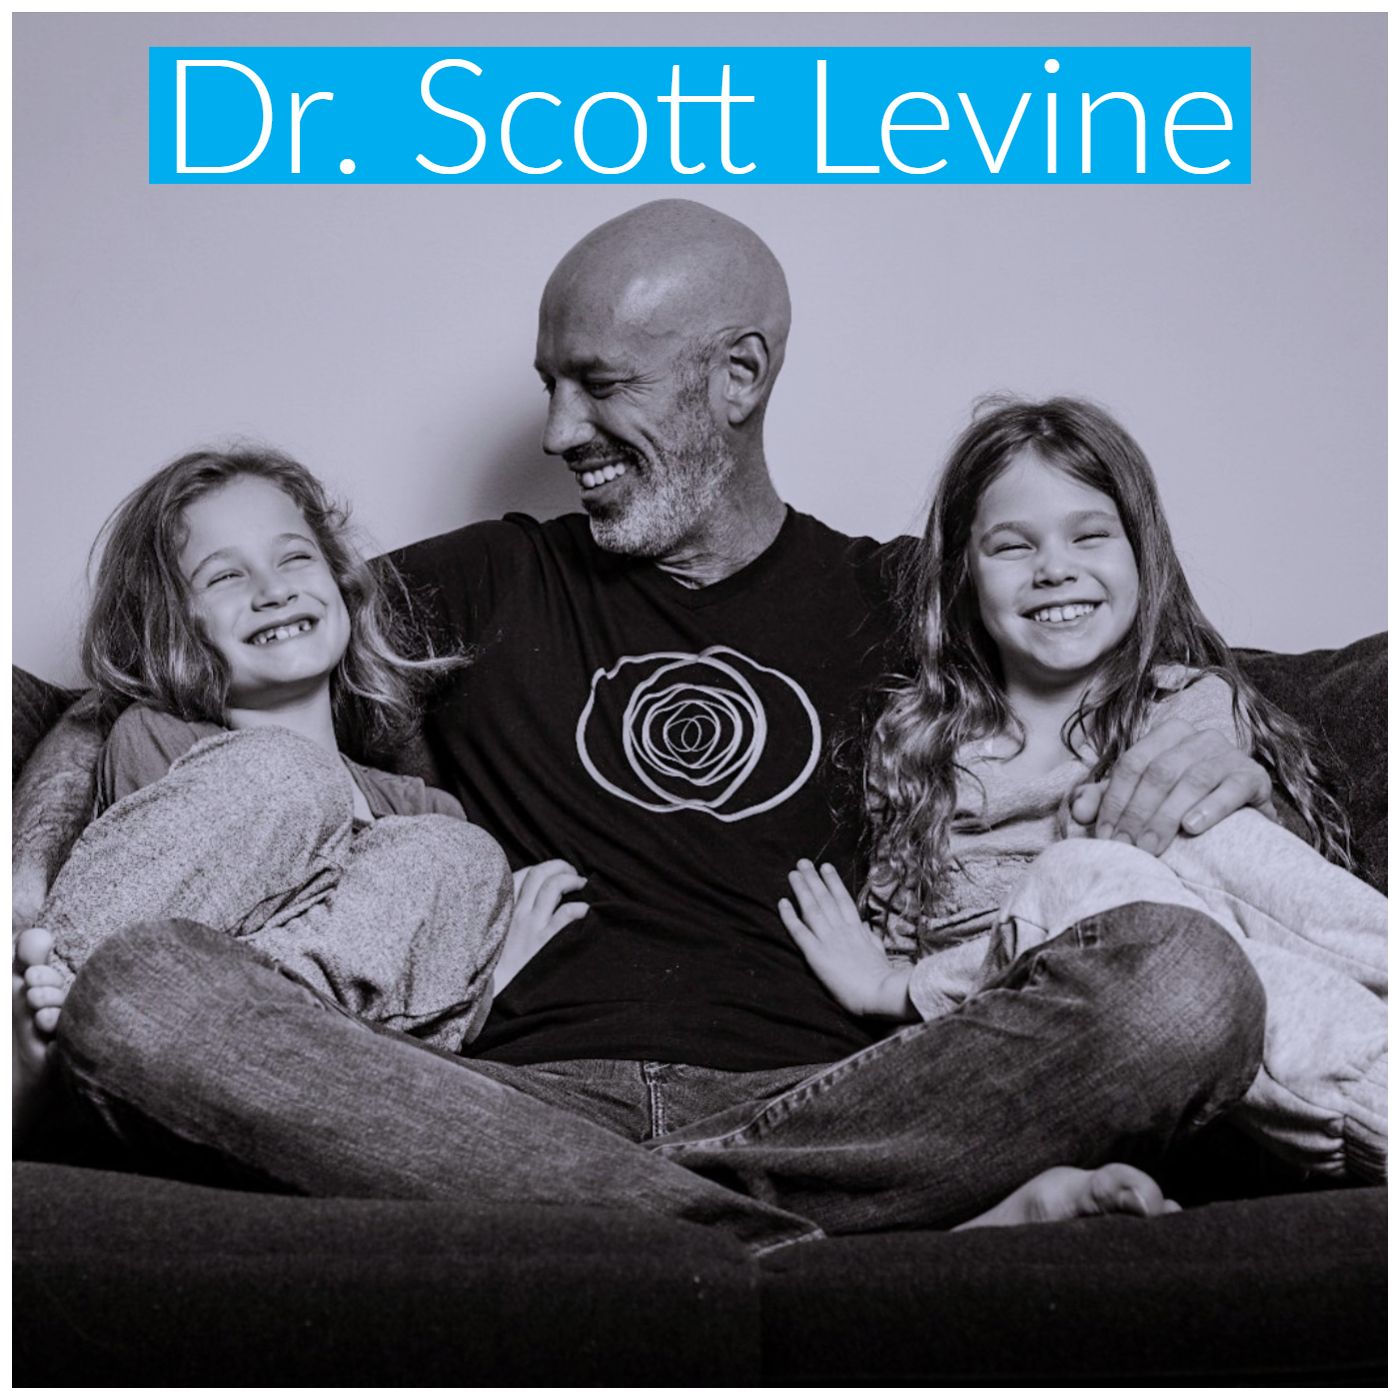 Dr. Scott Levine on Regenerative Medicine and Health Policies